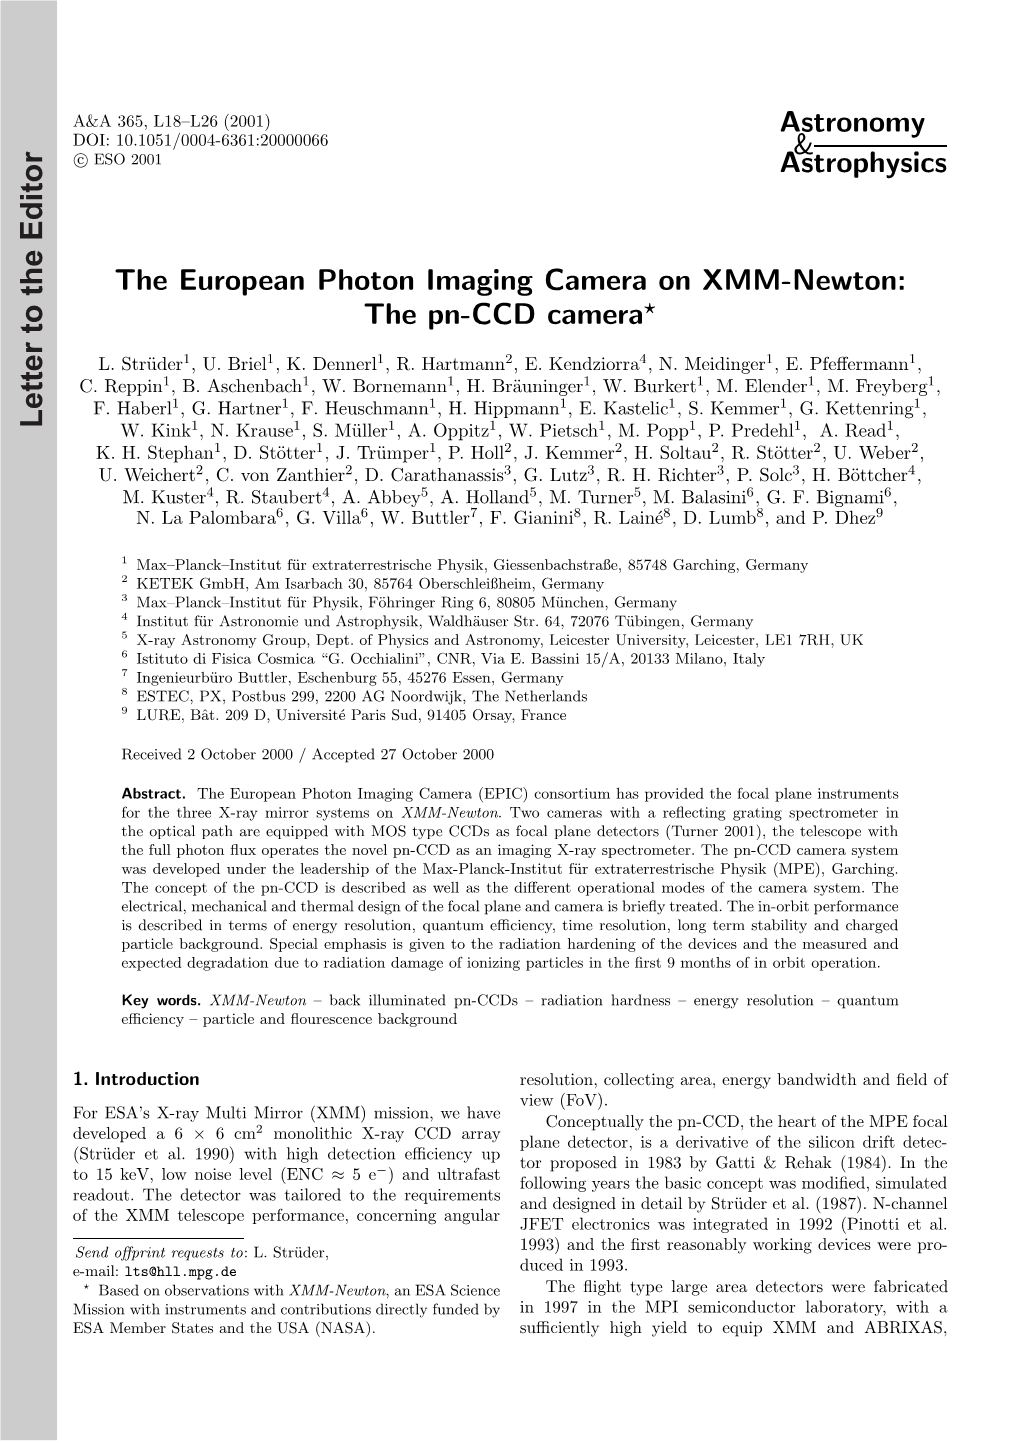 Astronomy & Astrophysics the European Photon Imaging Camera